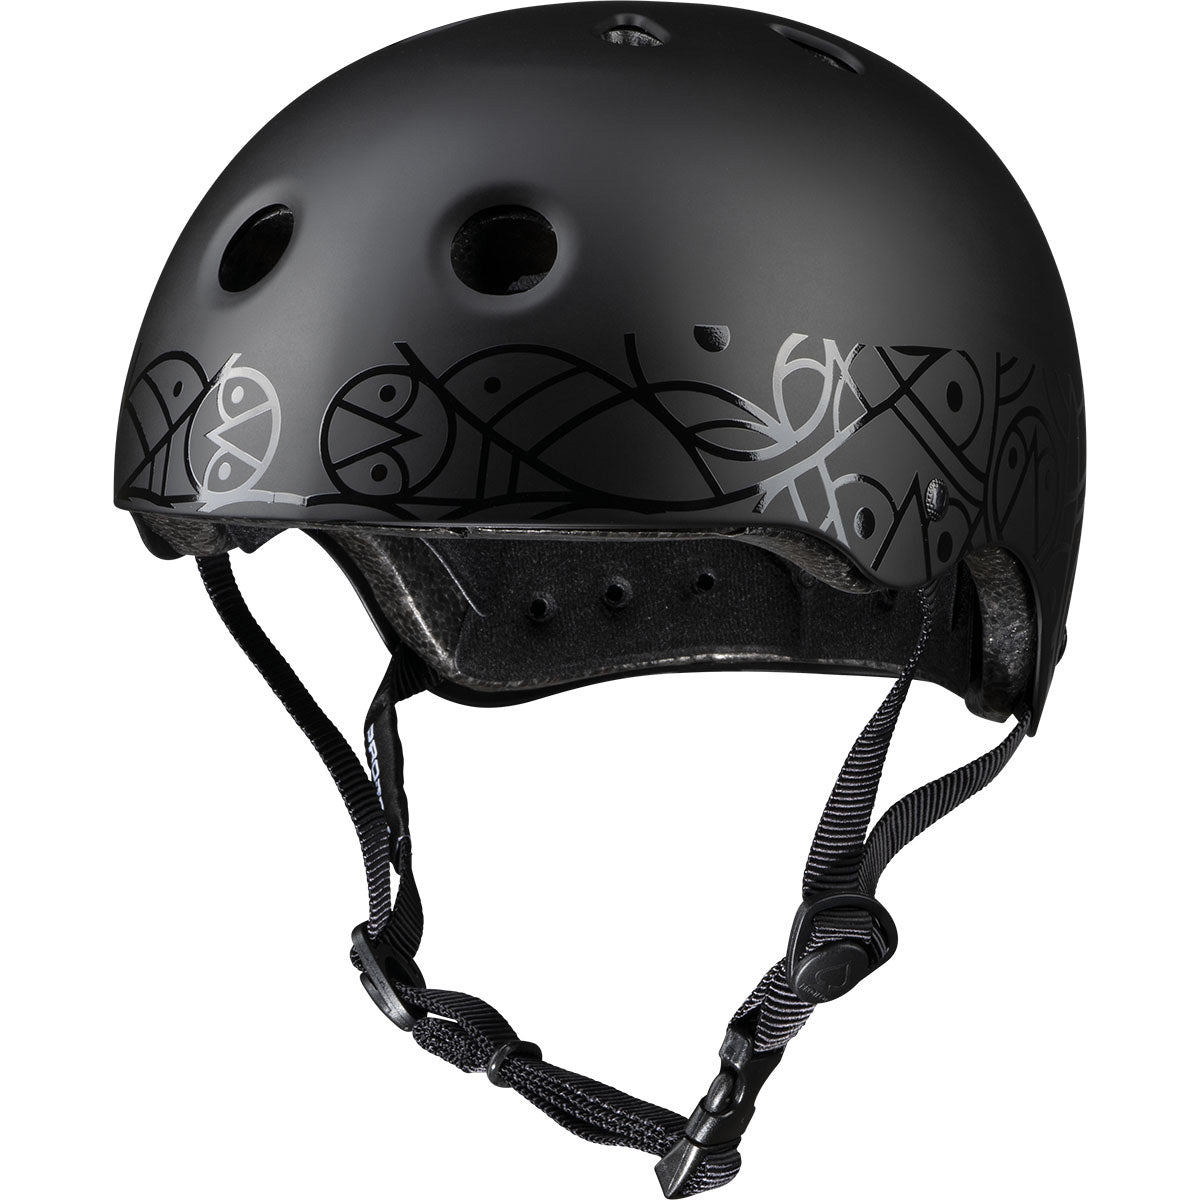 Pro Tec Classic Certified Pendelton Helmet - Black image 1